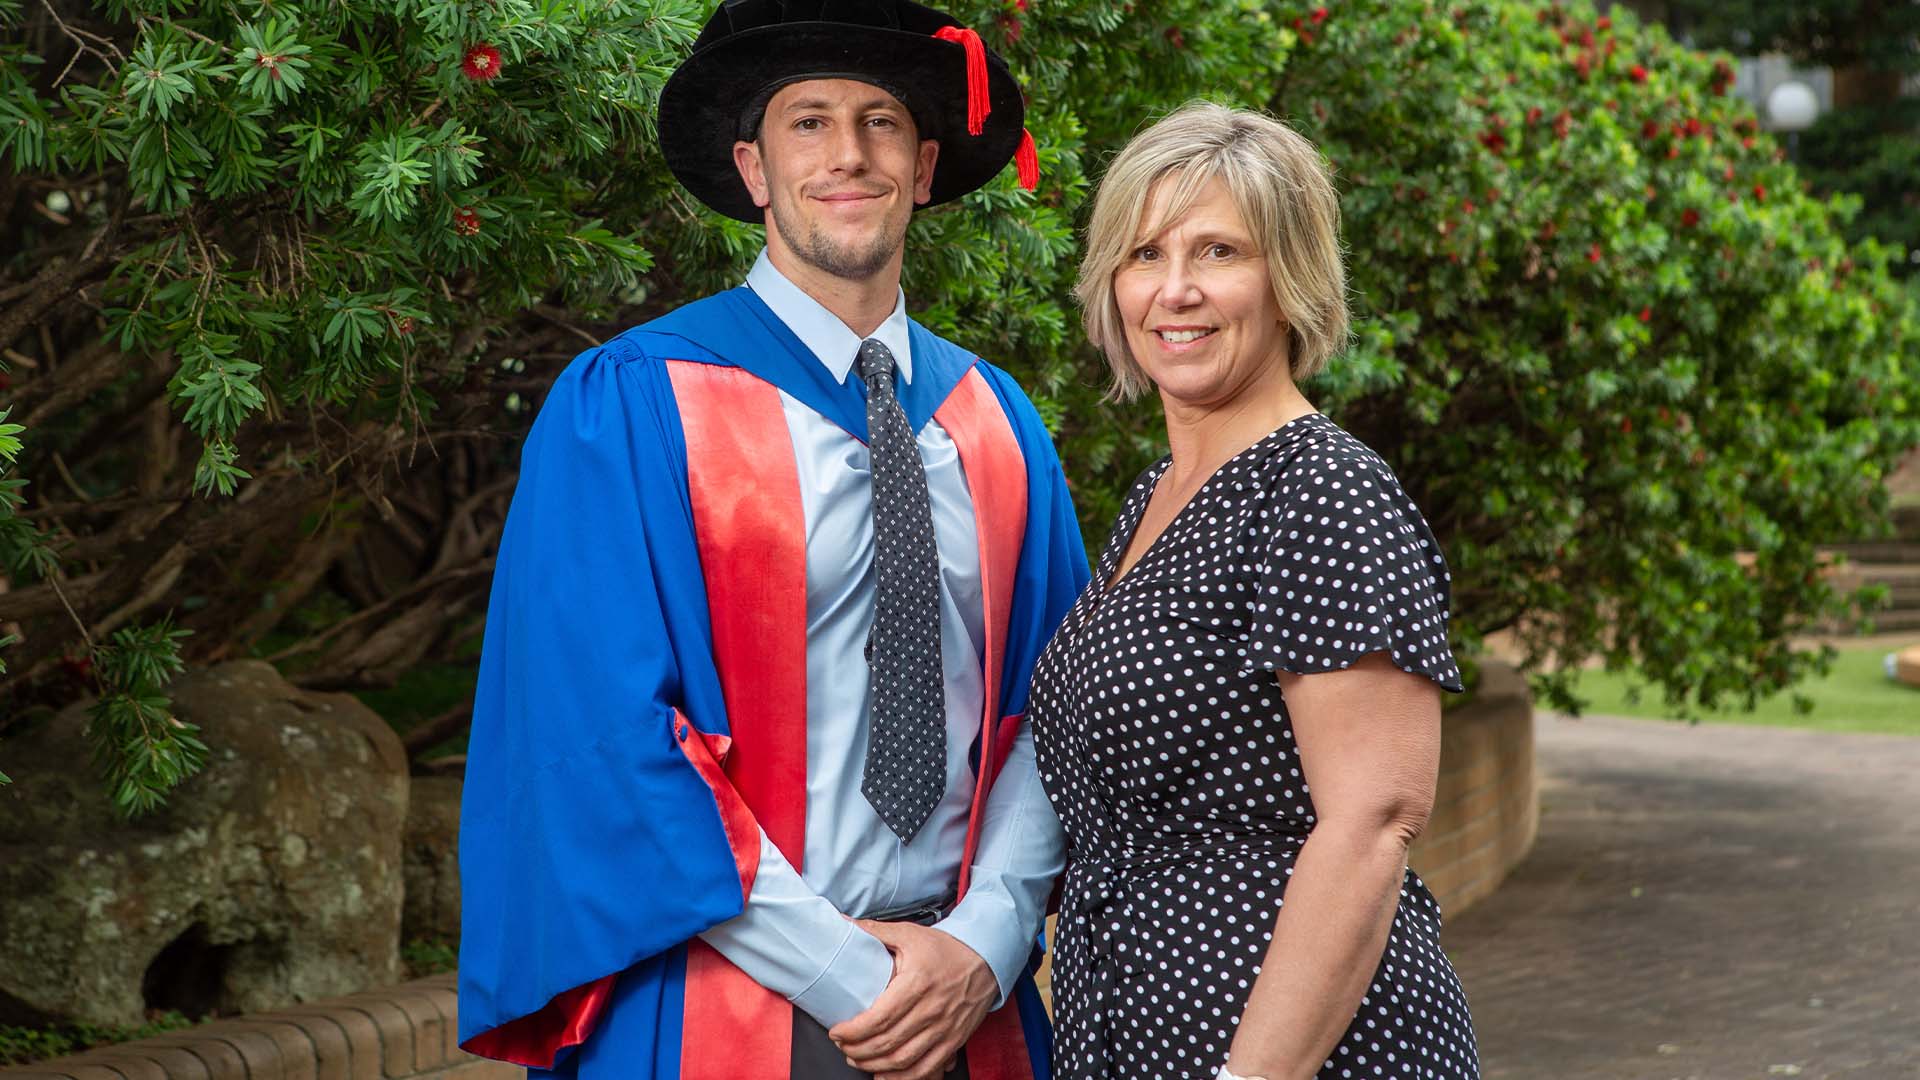 PhD graduate Jordan Sutcliffe's graduation photo with his mum